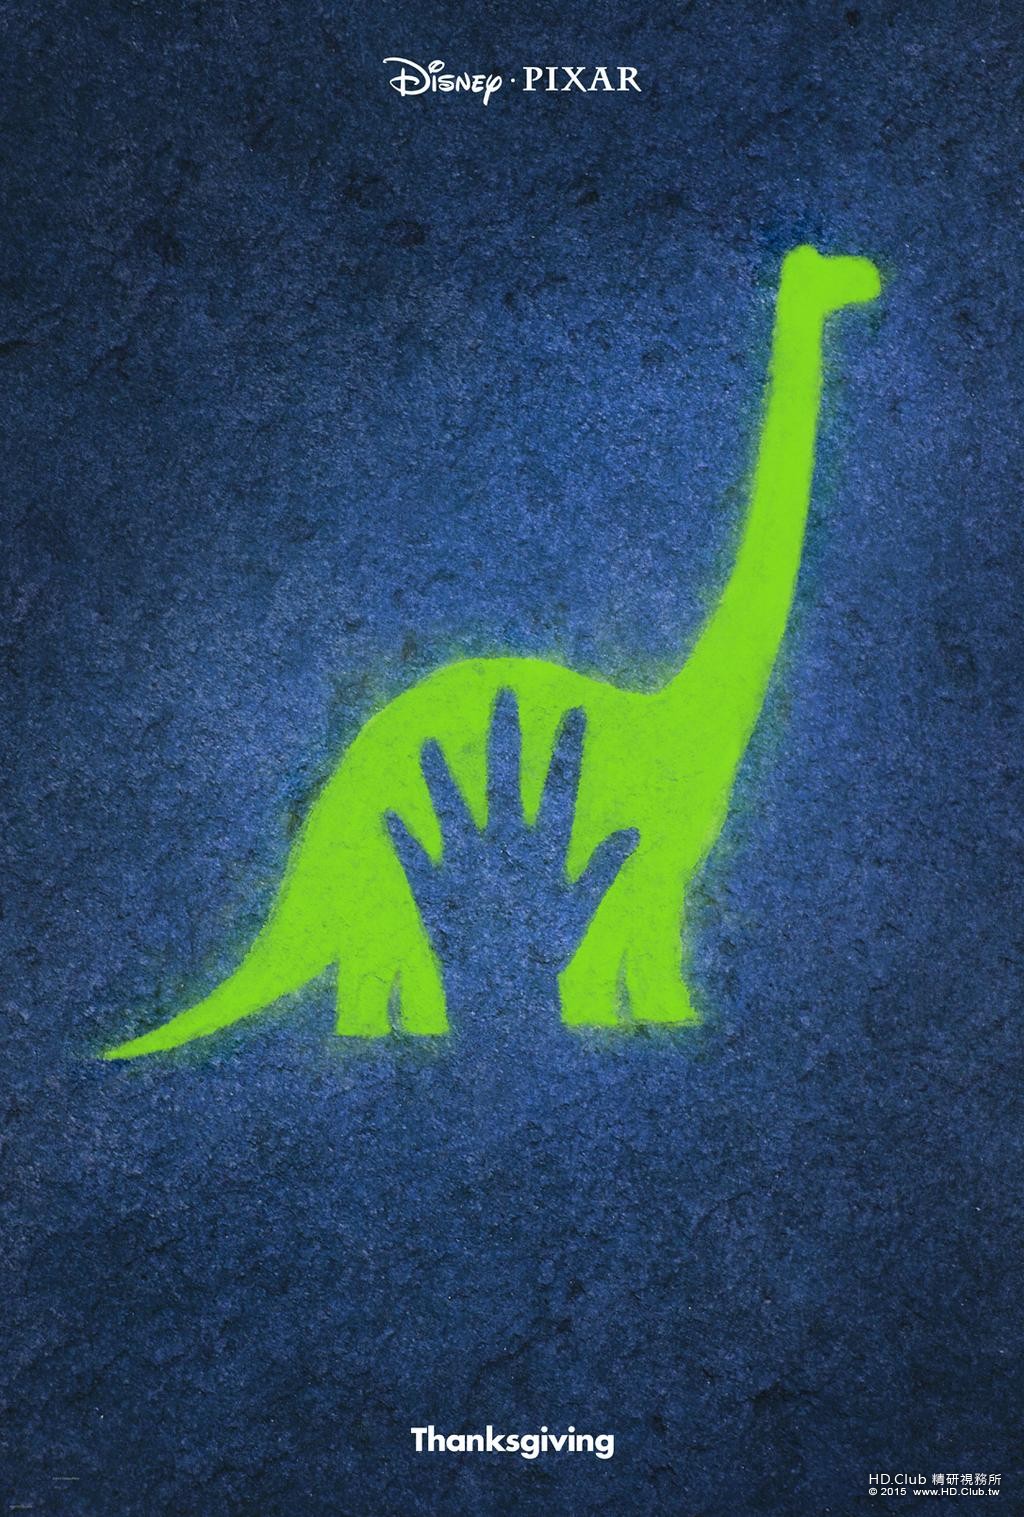 the-good-dinosaur-poster.jpg